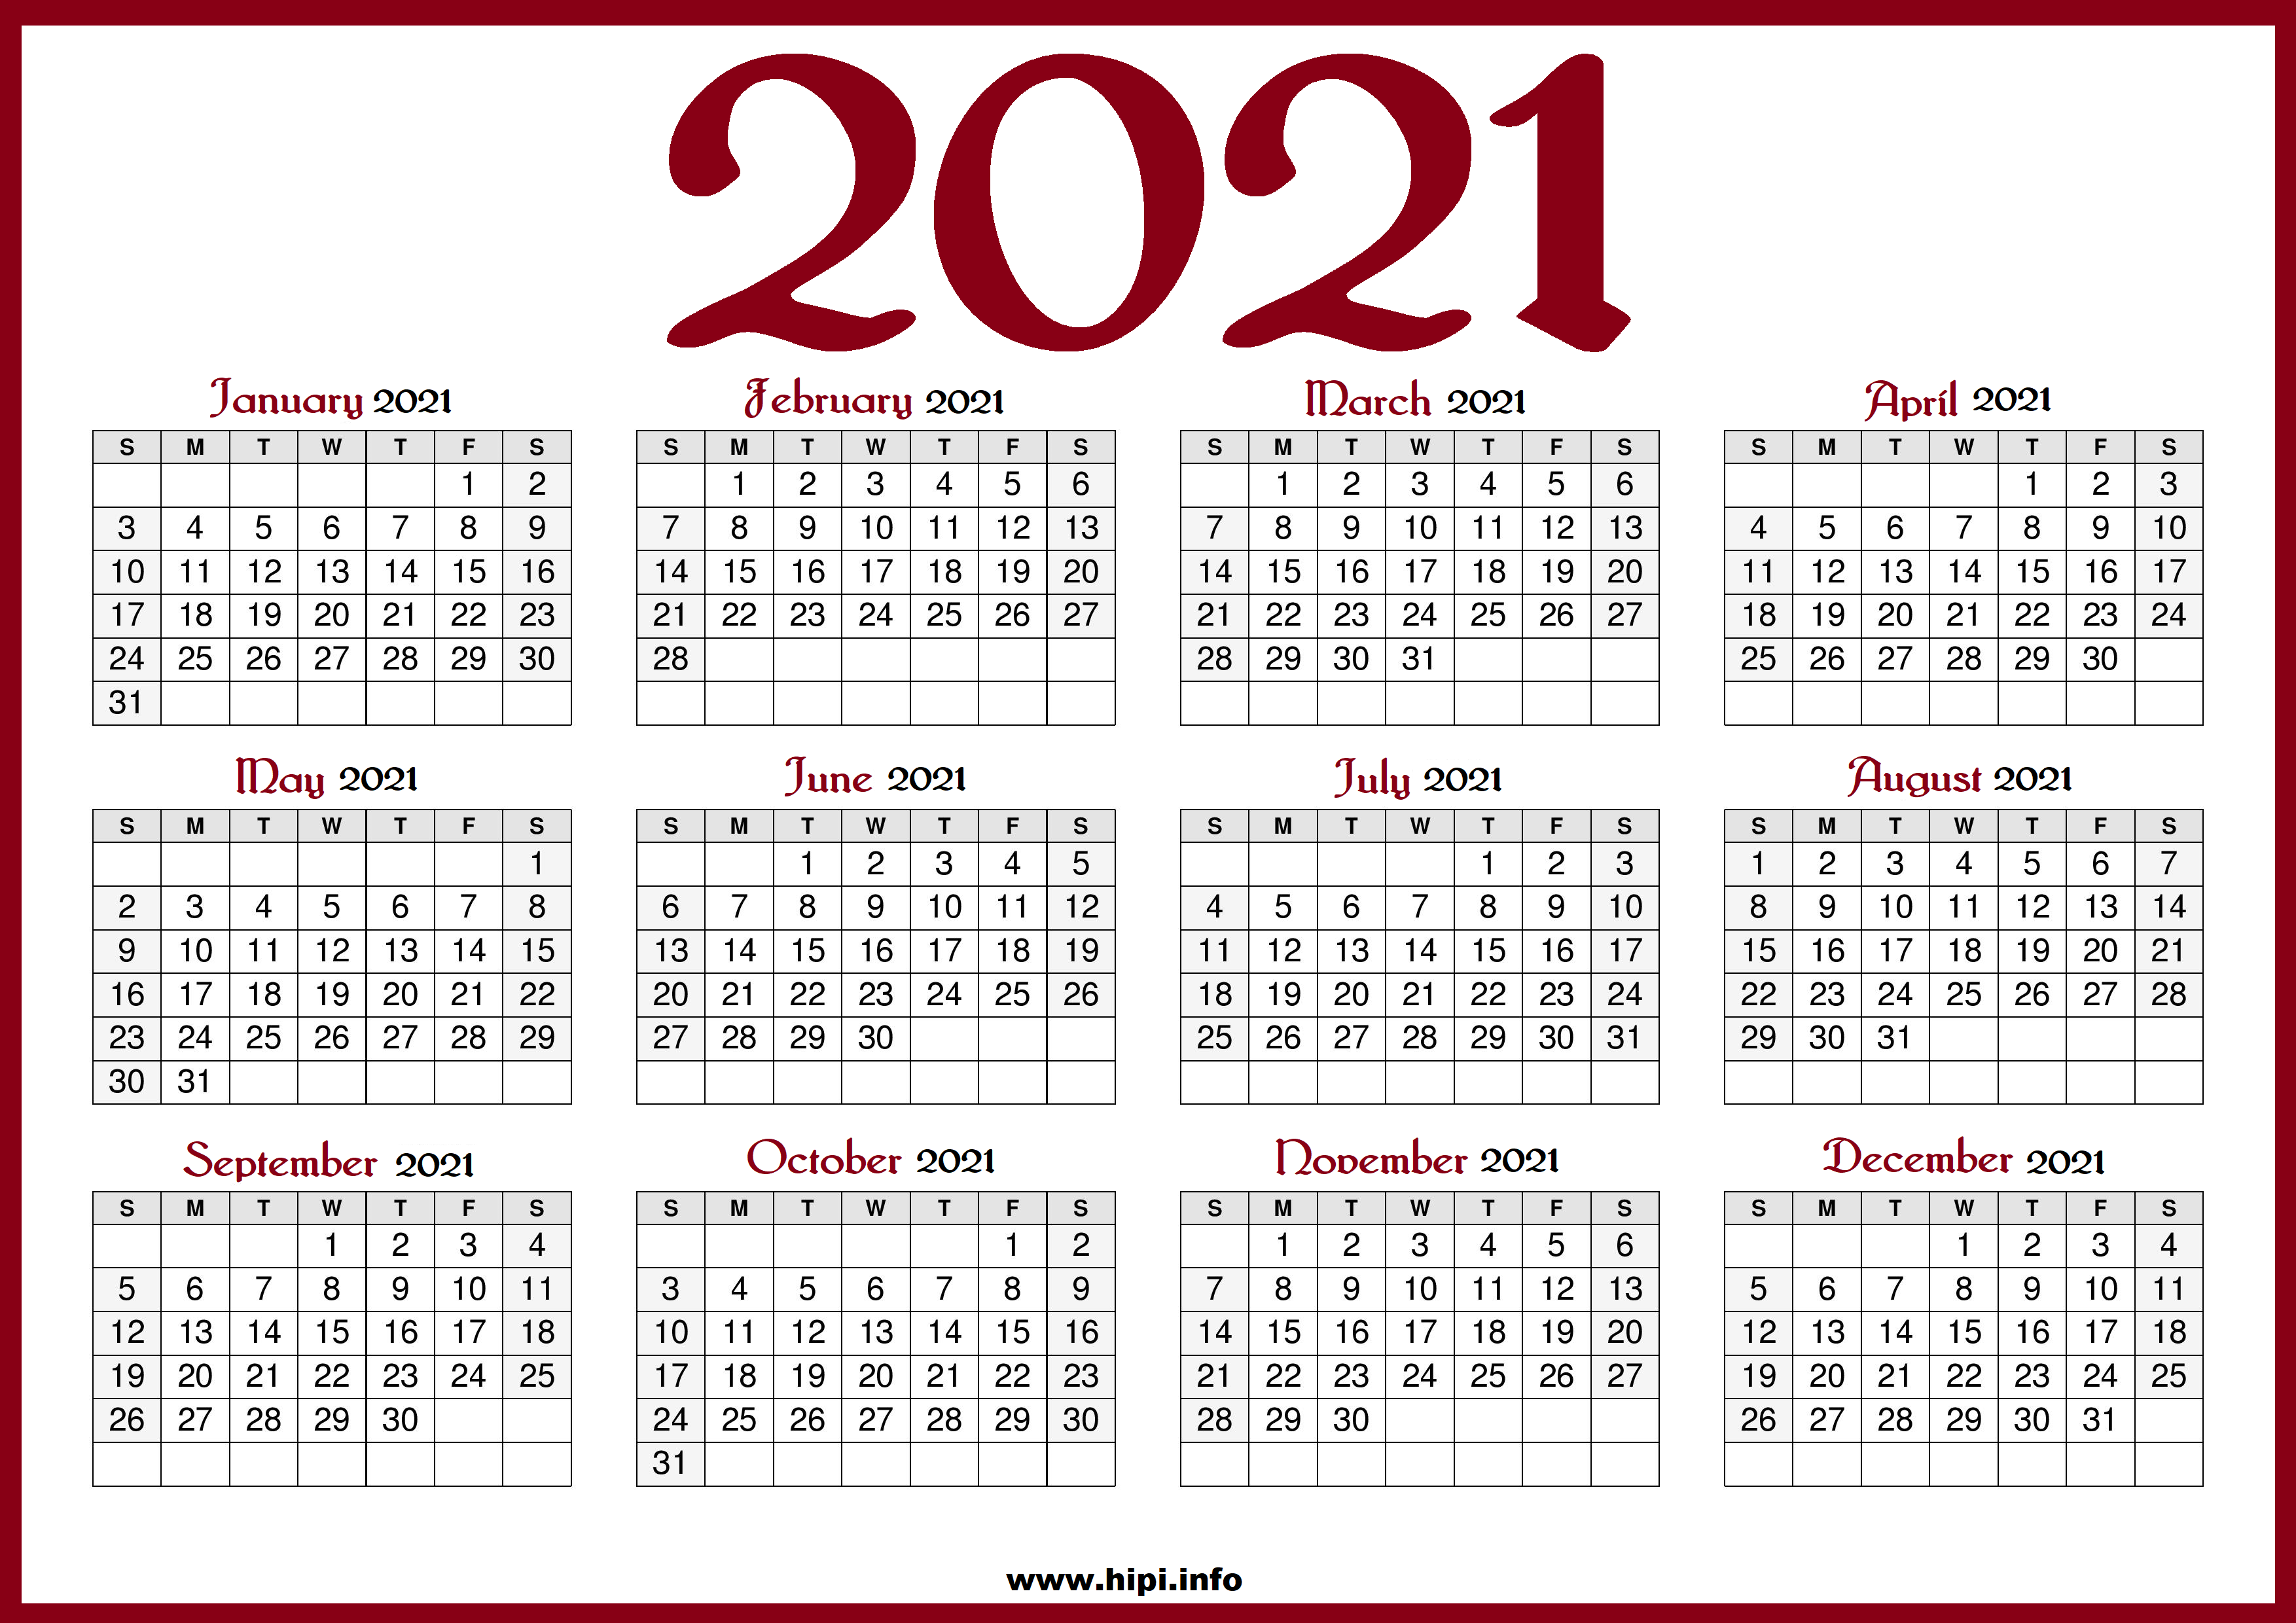 Printable 2021 Calendar With Us Holidays Red Color Hipi Info